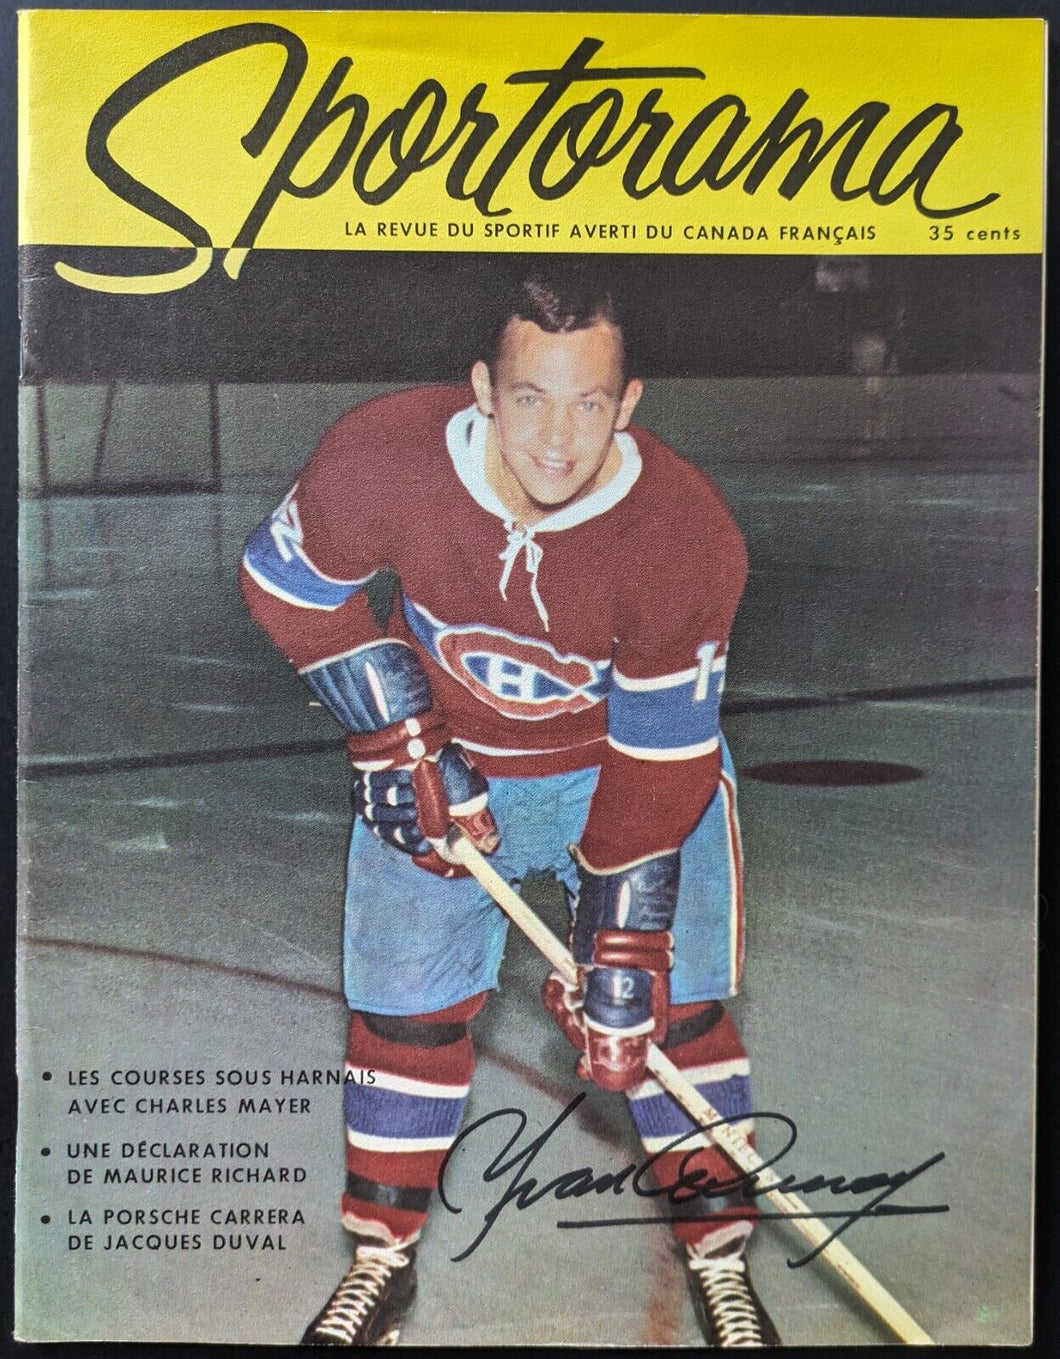 1967 Yvan Cournoyer Autographed Sportorama Magazine Signed Montreal Canadiens